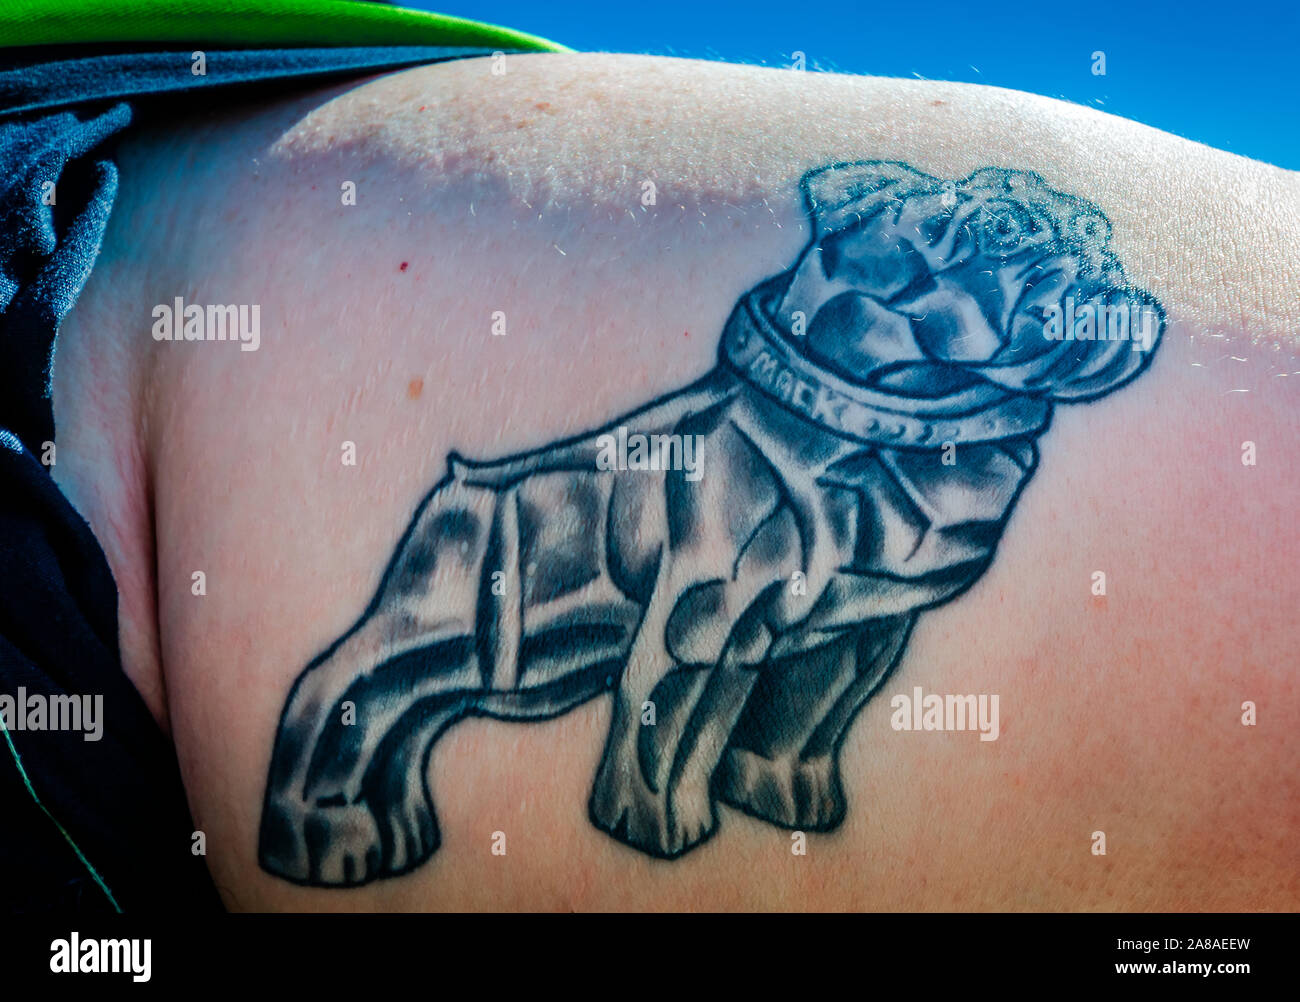 Mack bulldog hi-res stock photography and images - Alamy